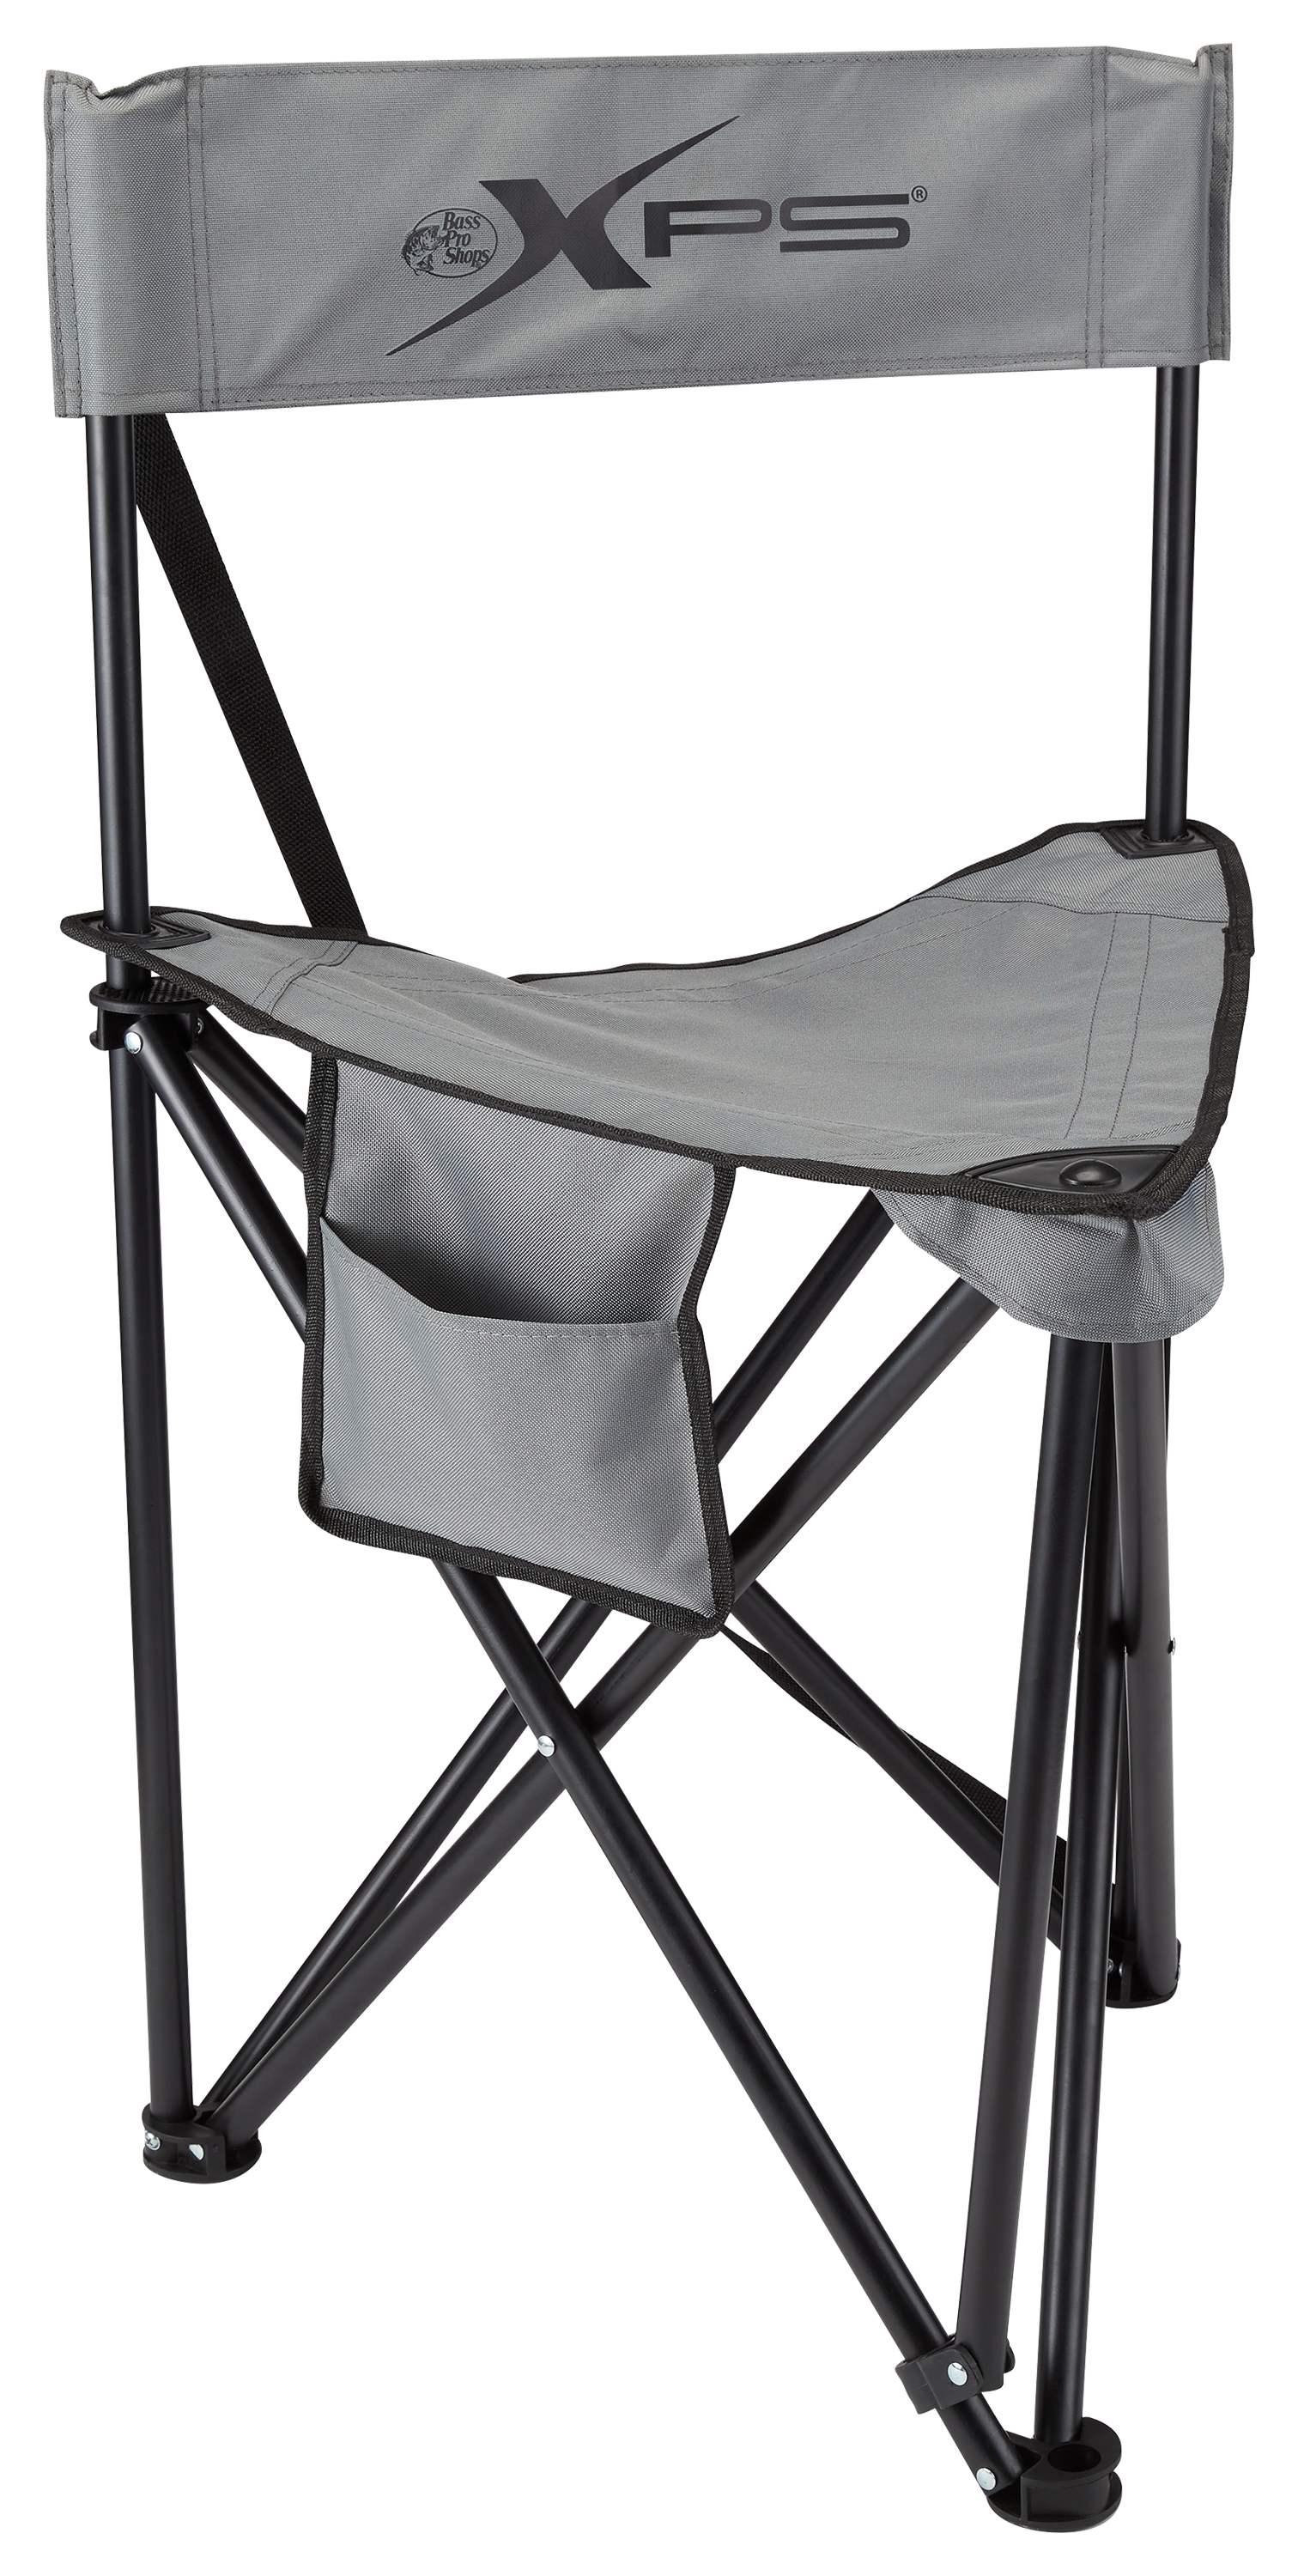 Eskimo XL Folding Ice Chair